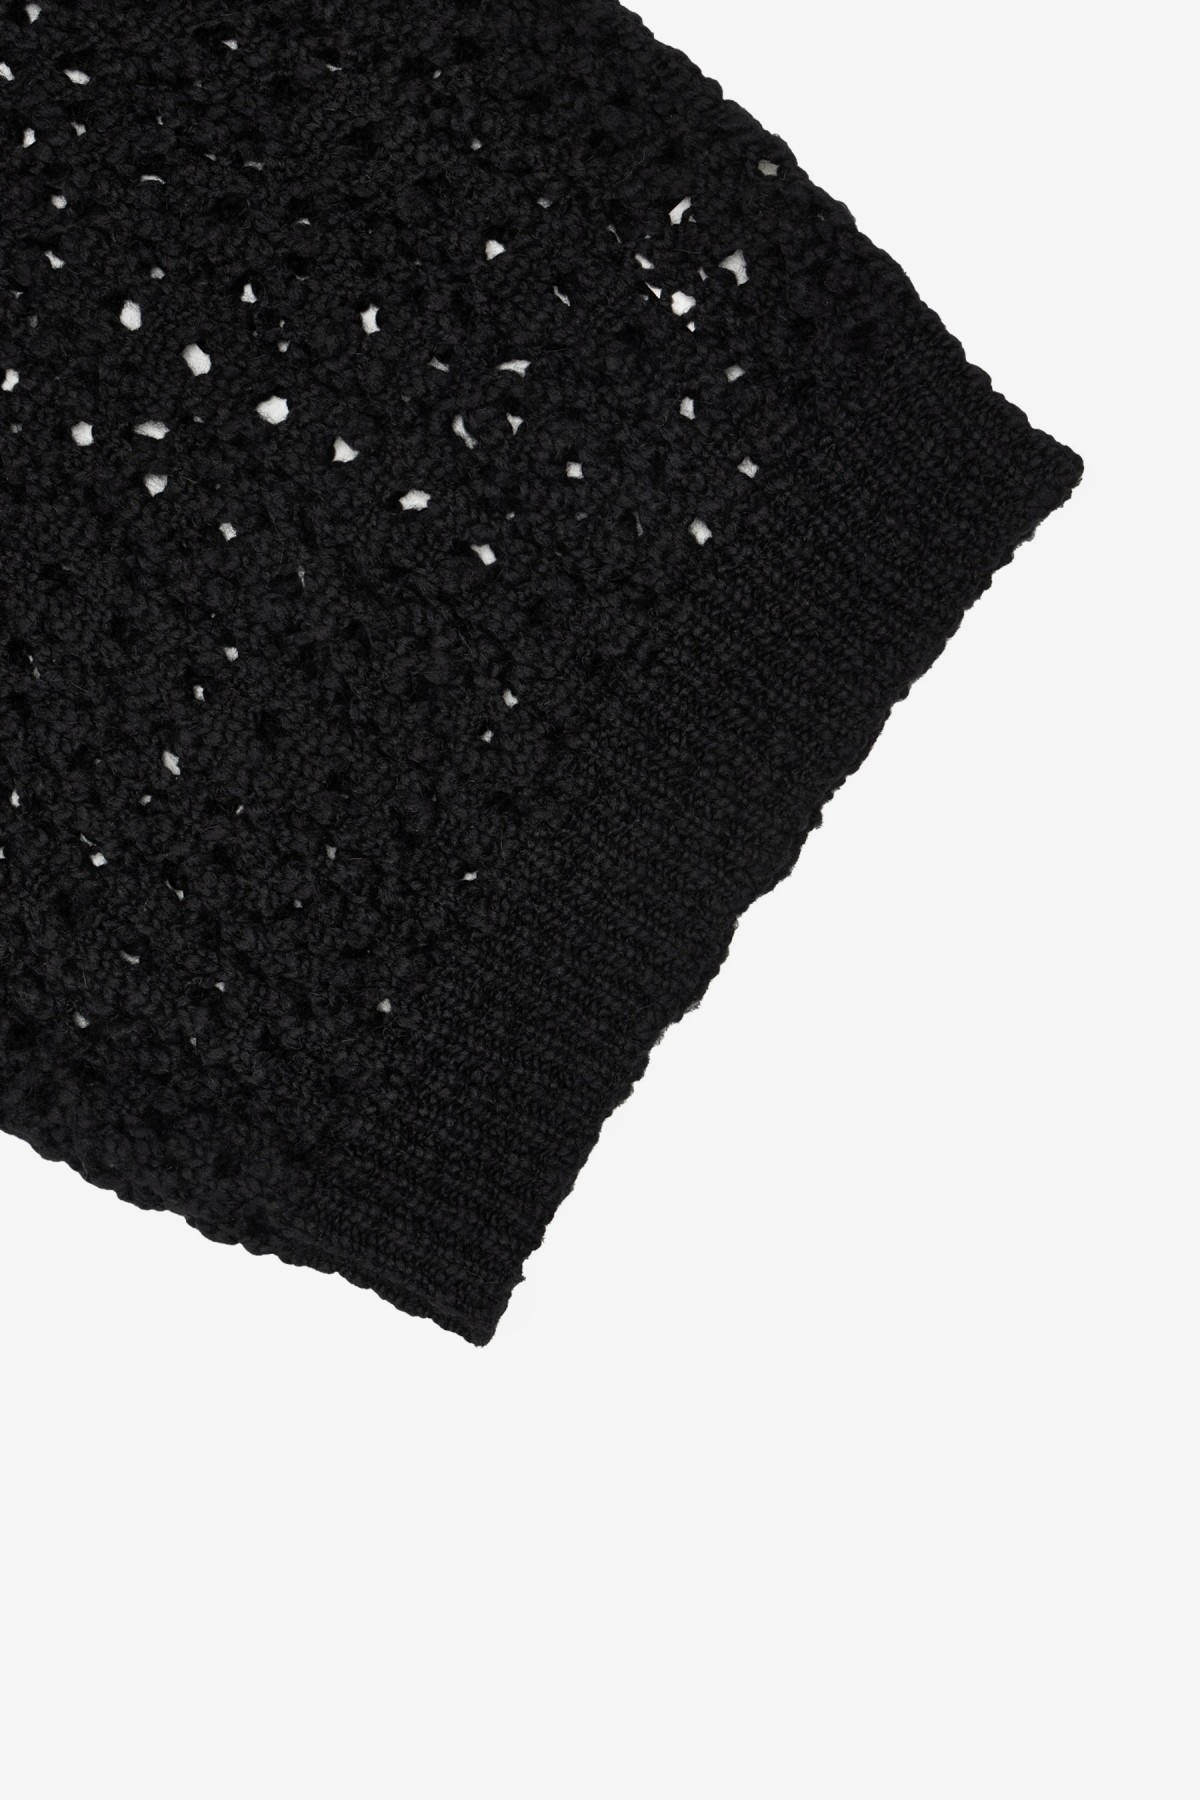 Amomento Crochet Vest in Black